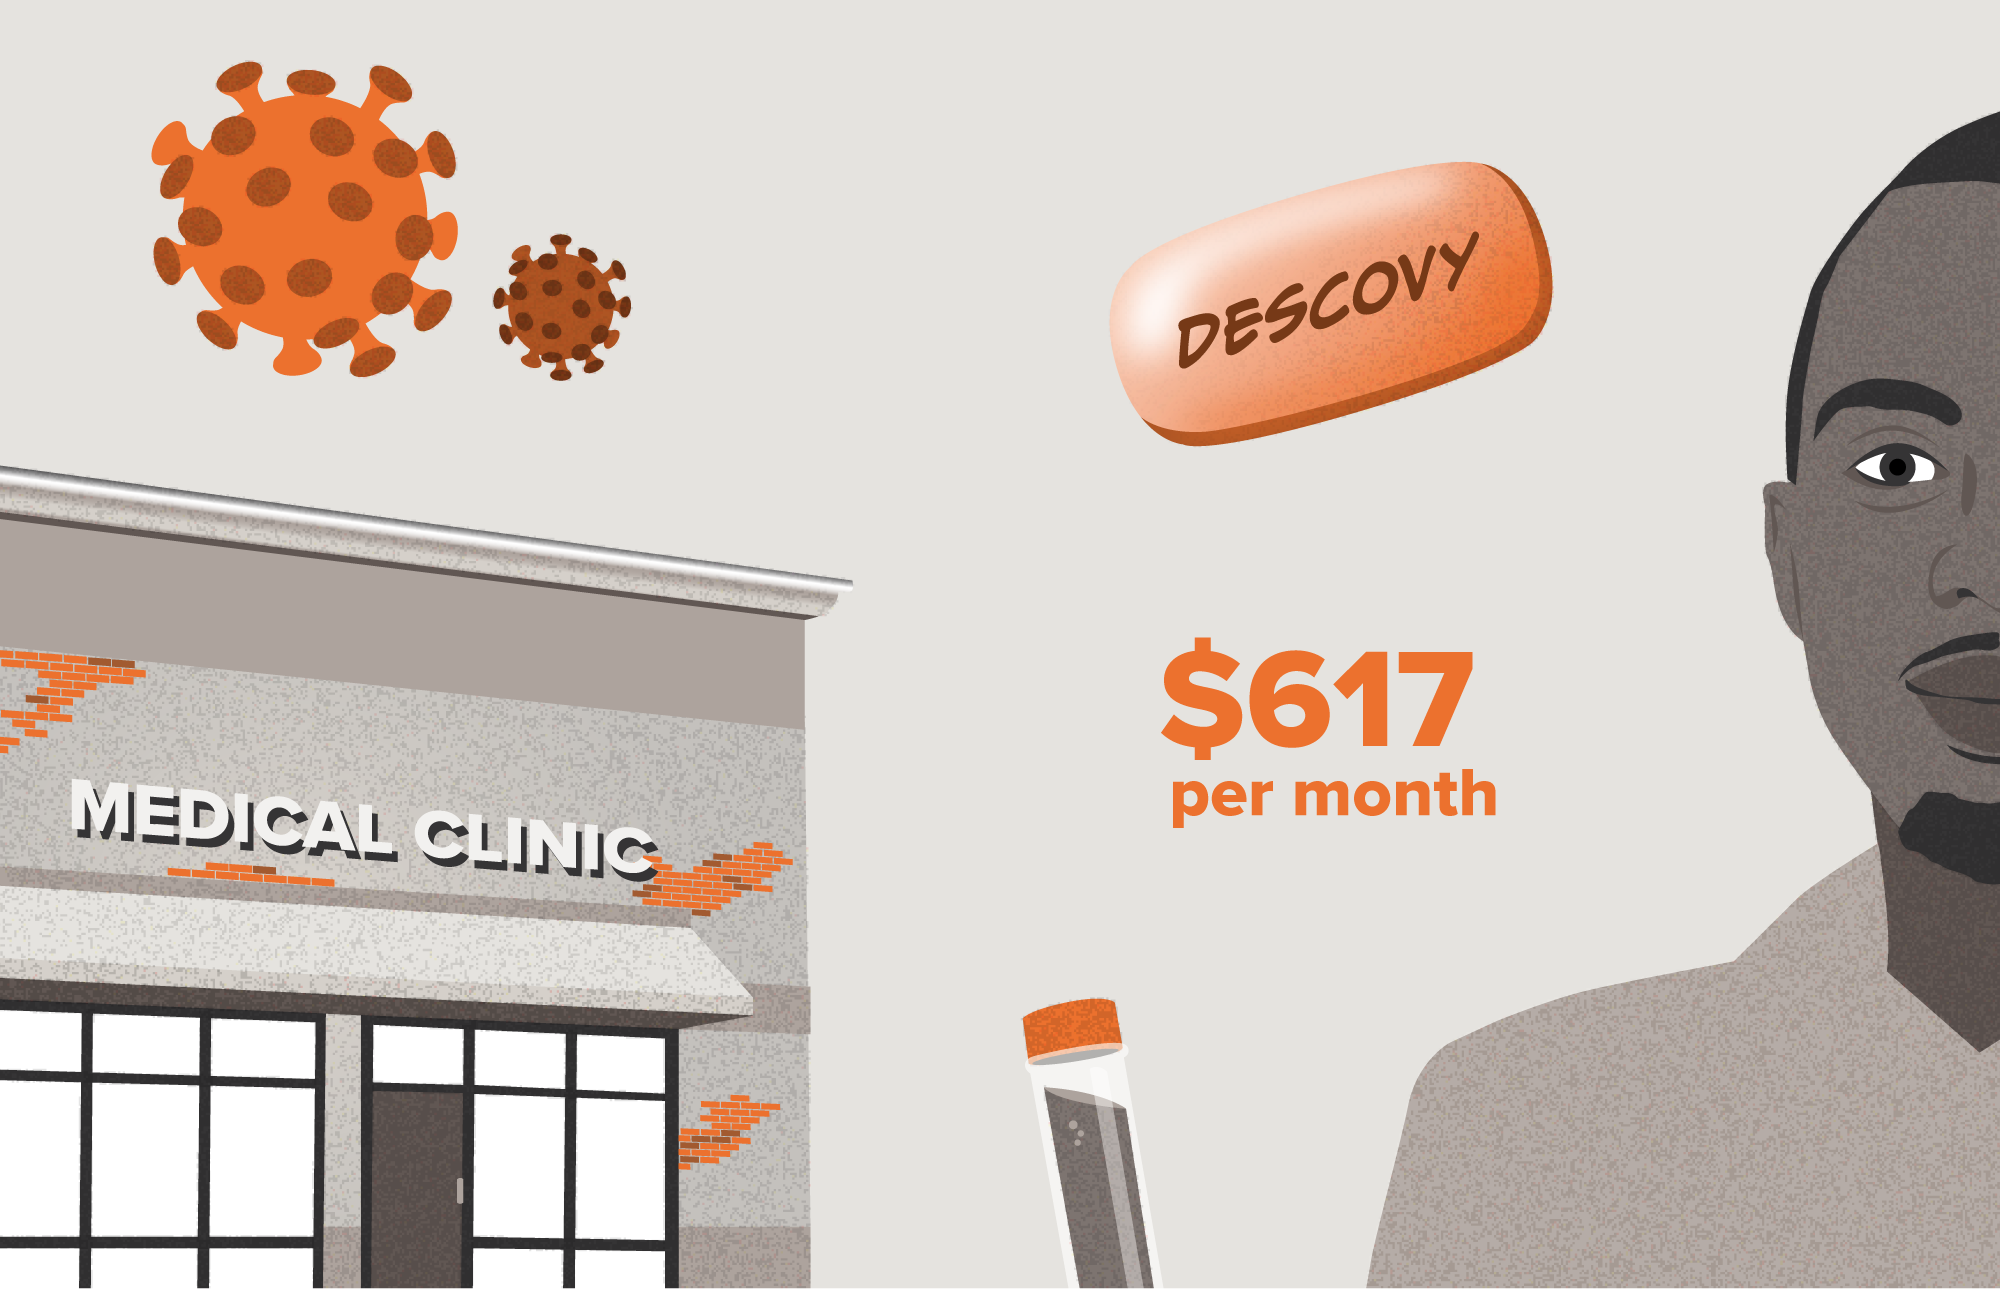 Scenario 1: Clinic Benefits from Prescribing Descovy